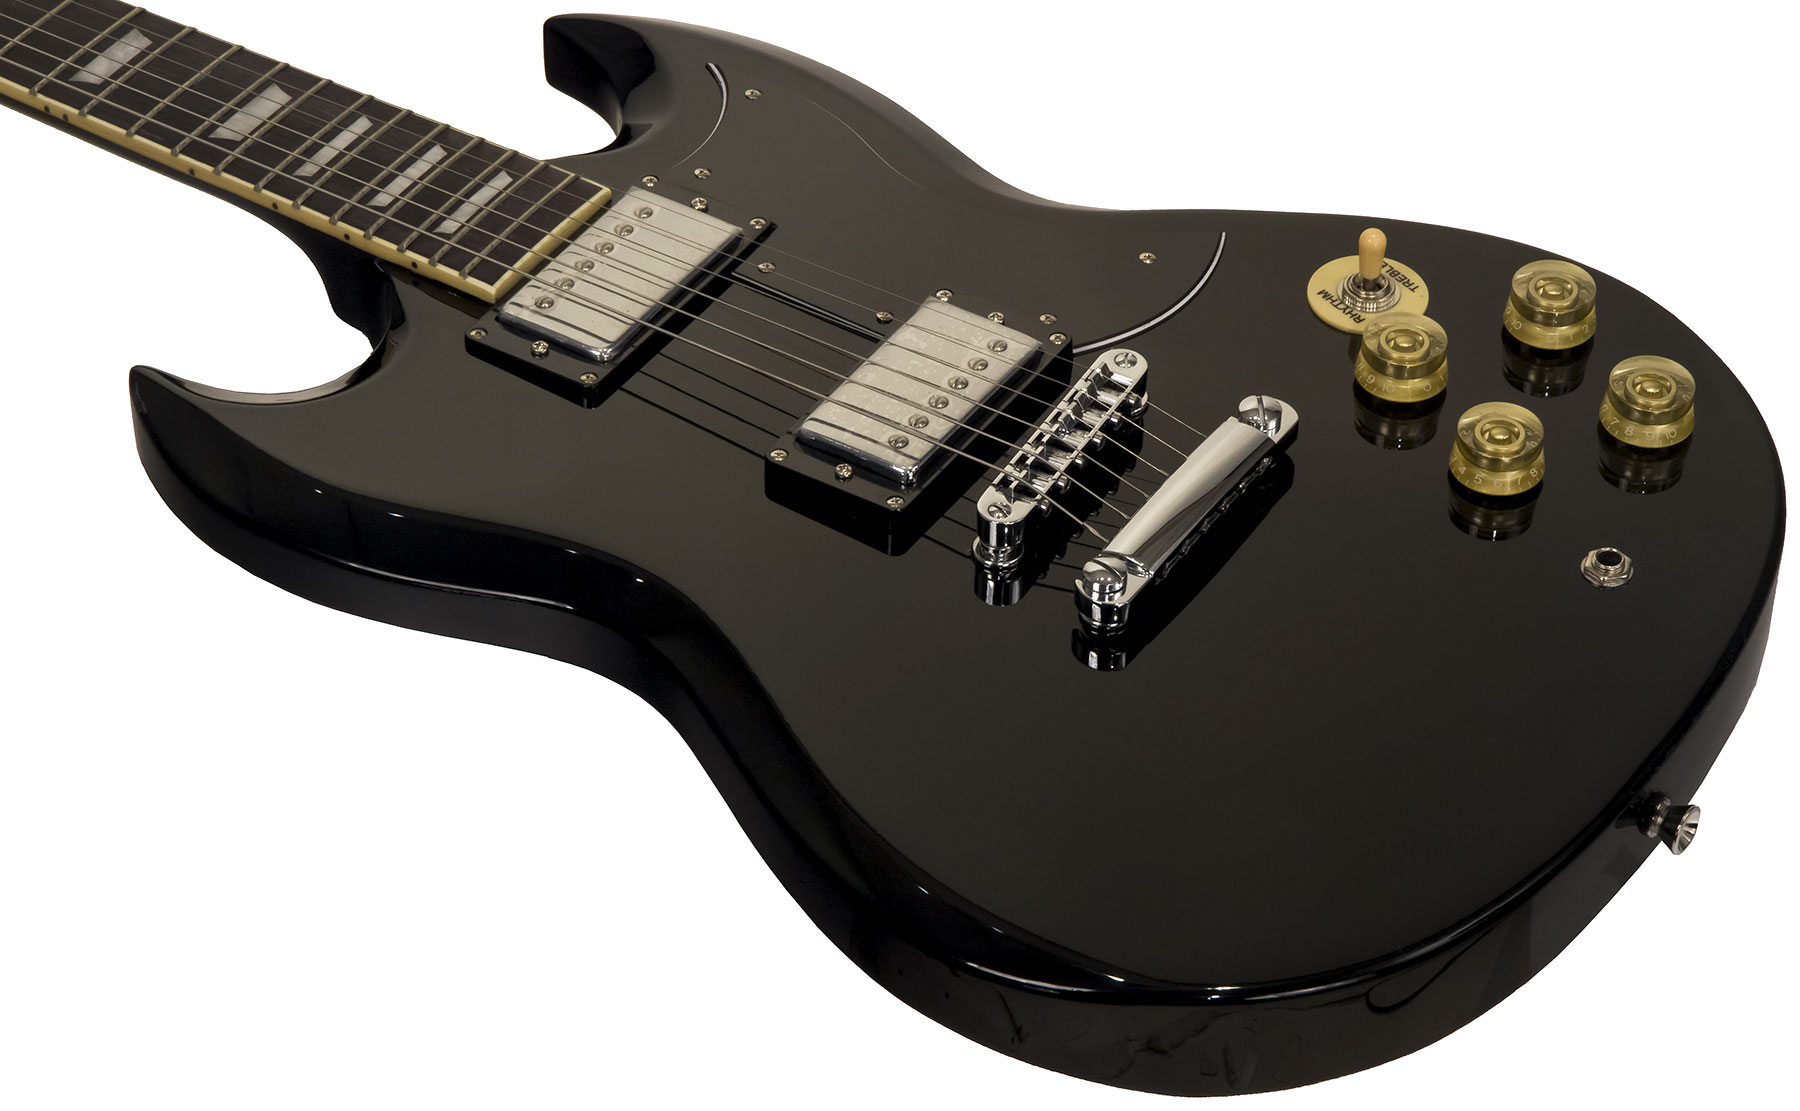 Eastone Sdc70 Hh Ht Pur - Black - Retro rock electric guitar - Variation 2